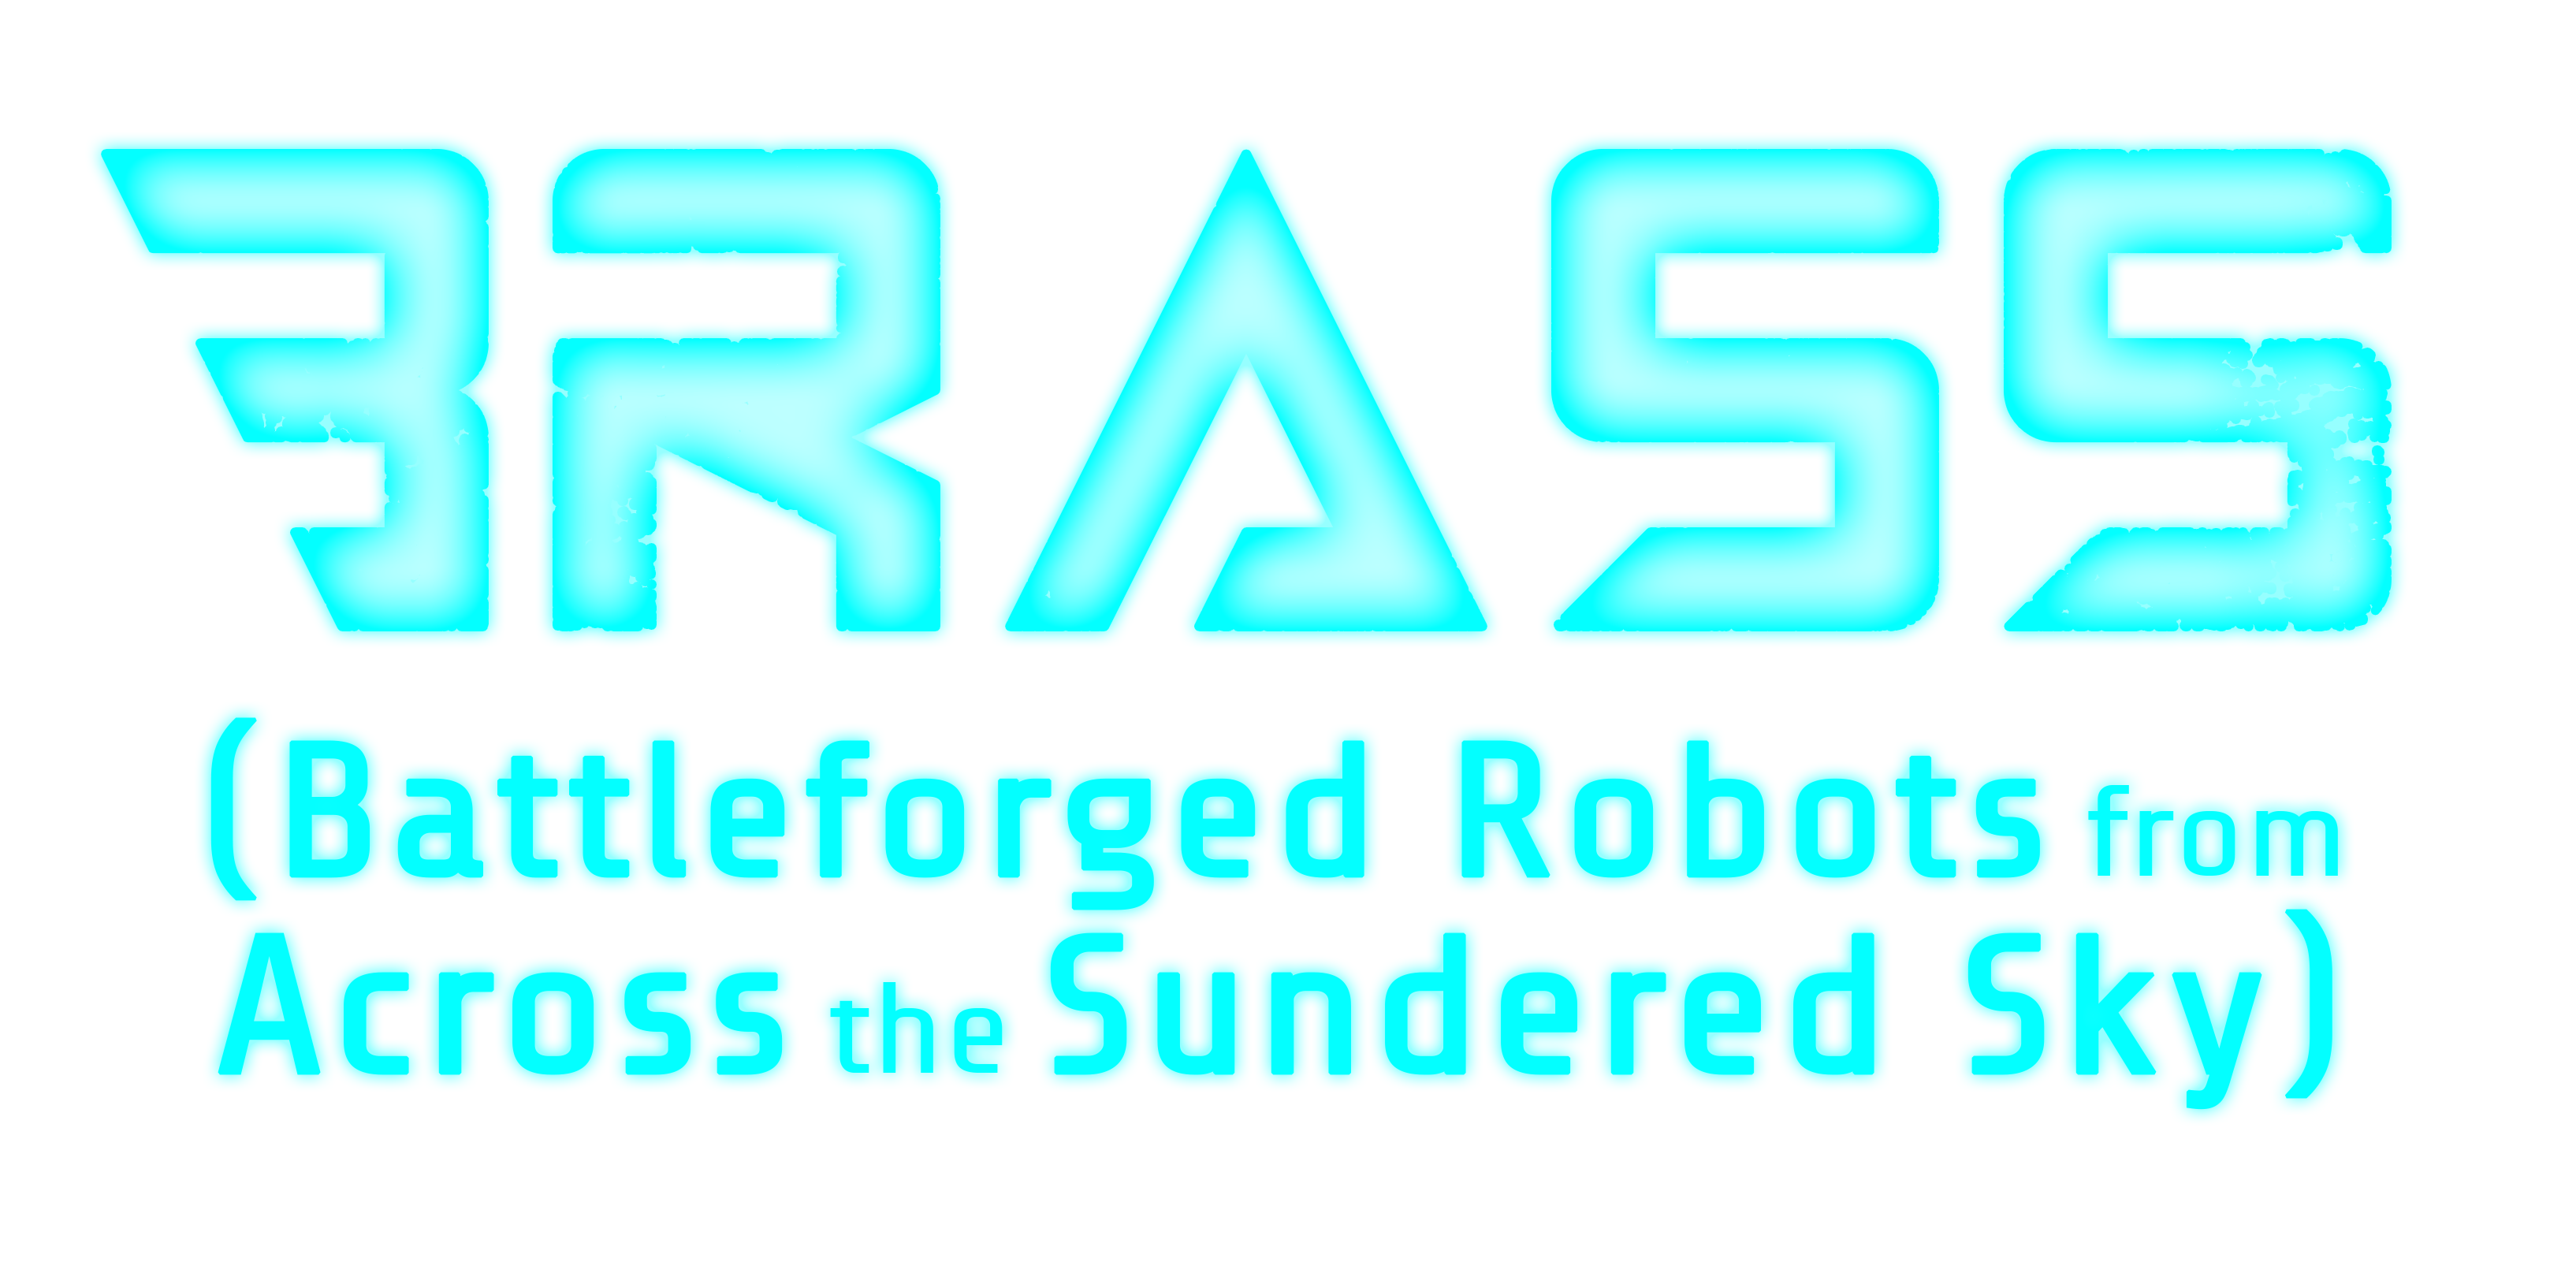 B.R.A.S.S. Playtest Edition